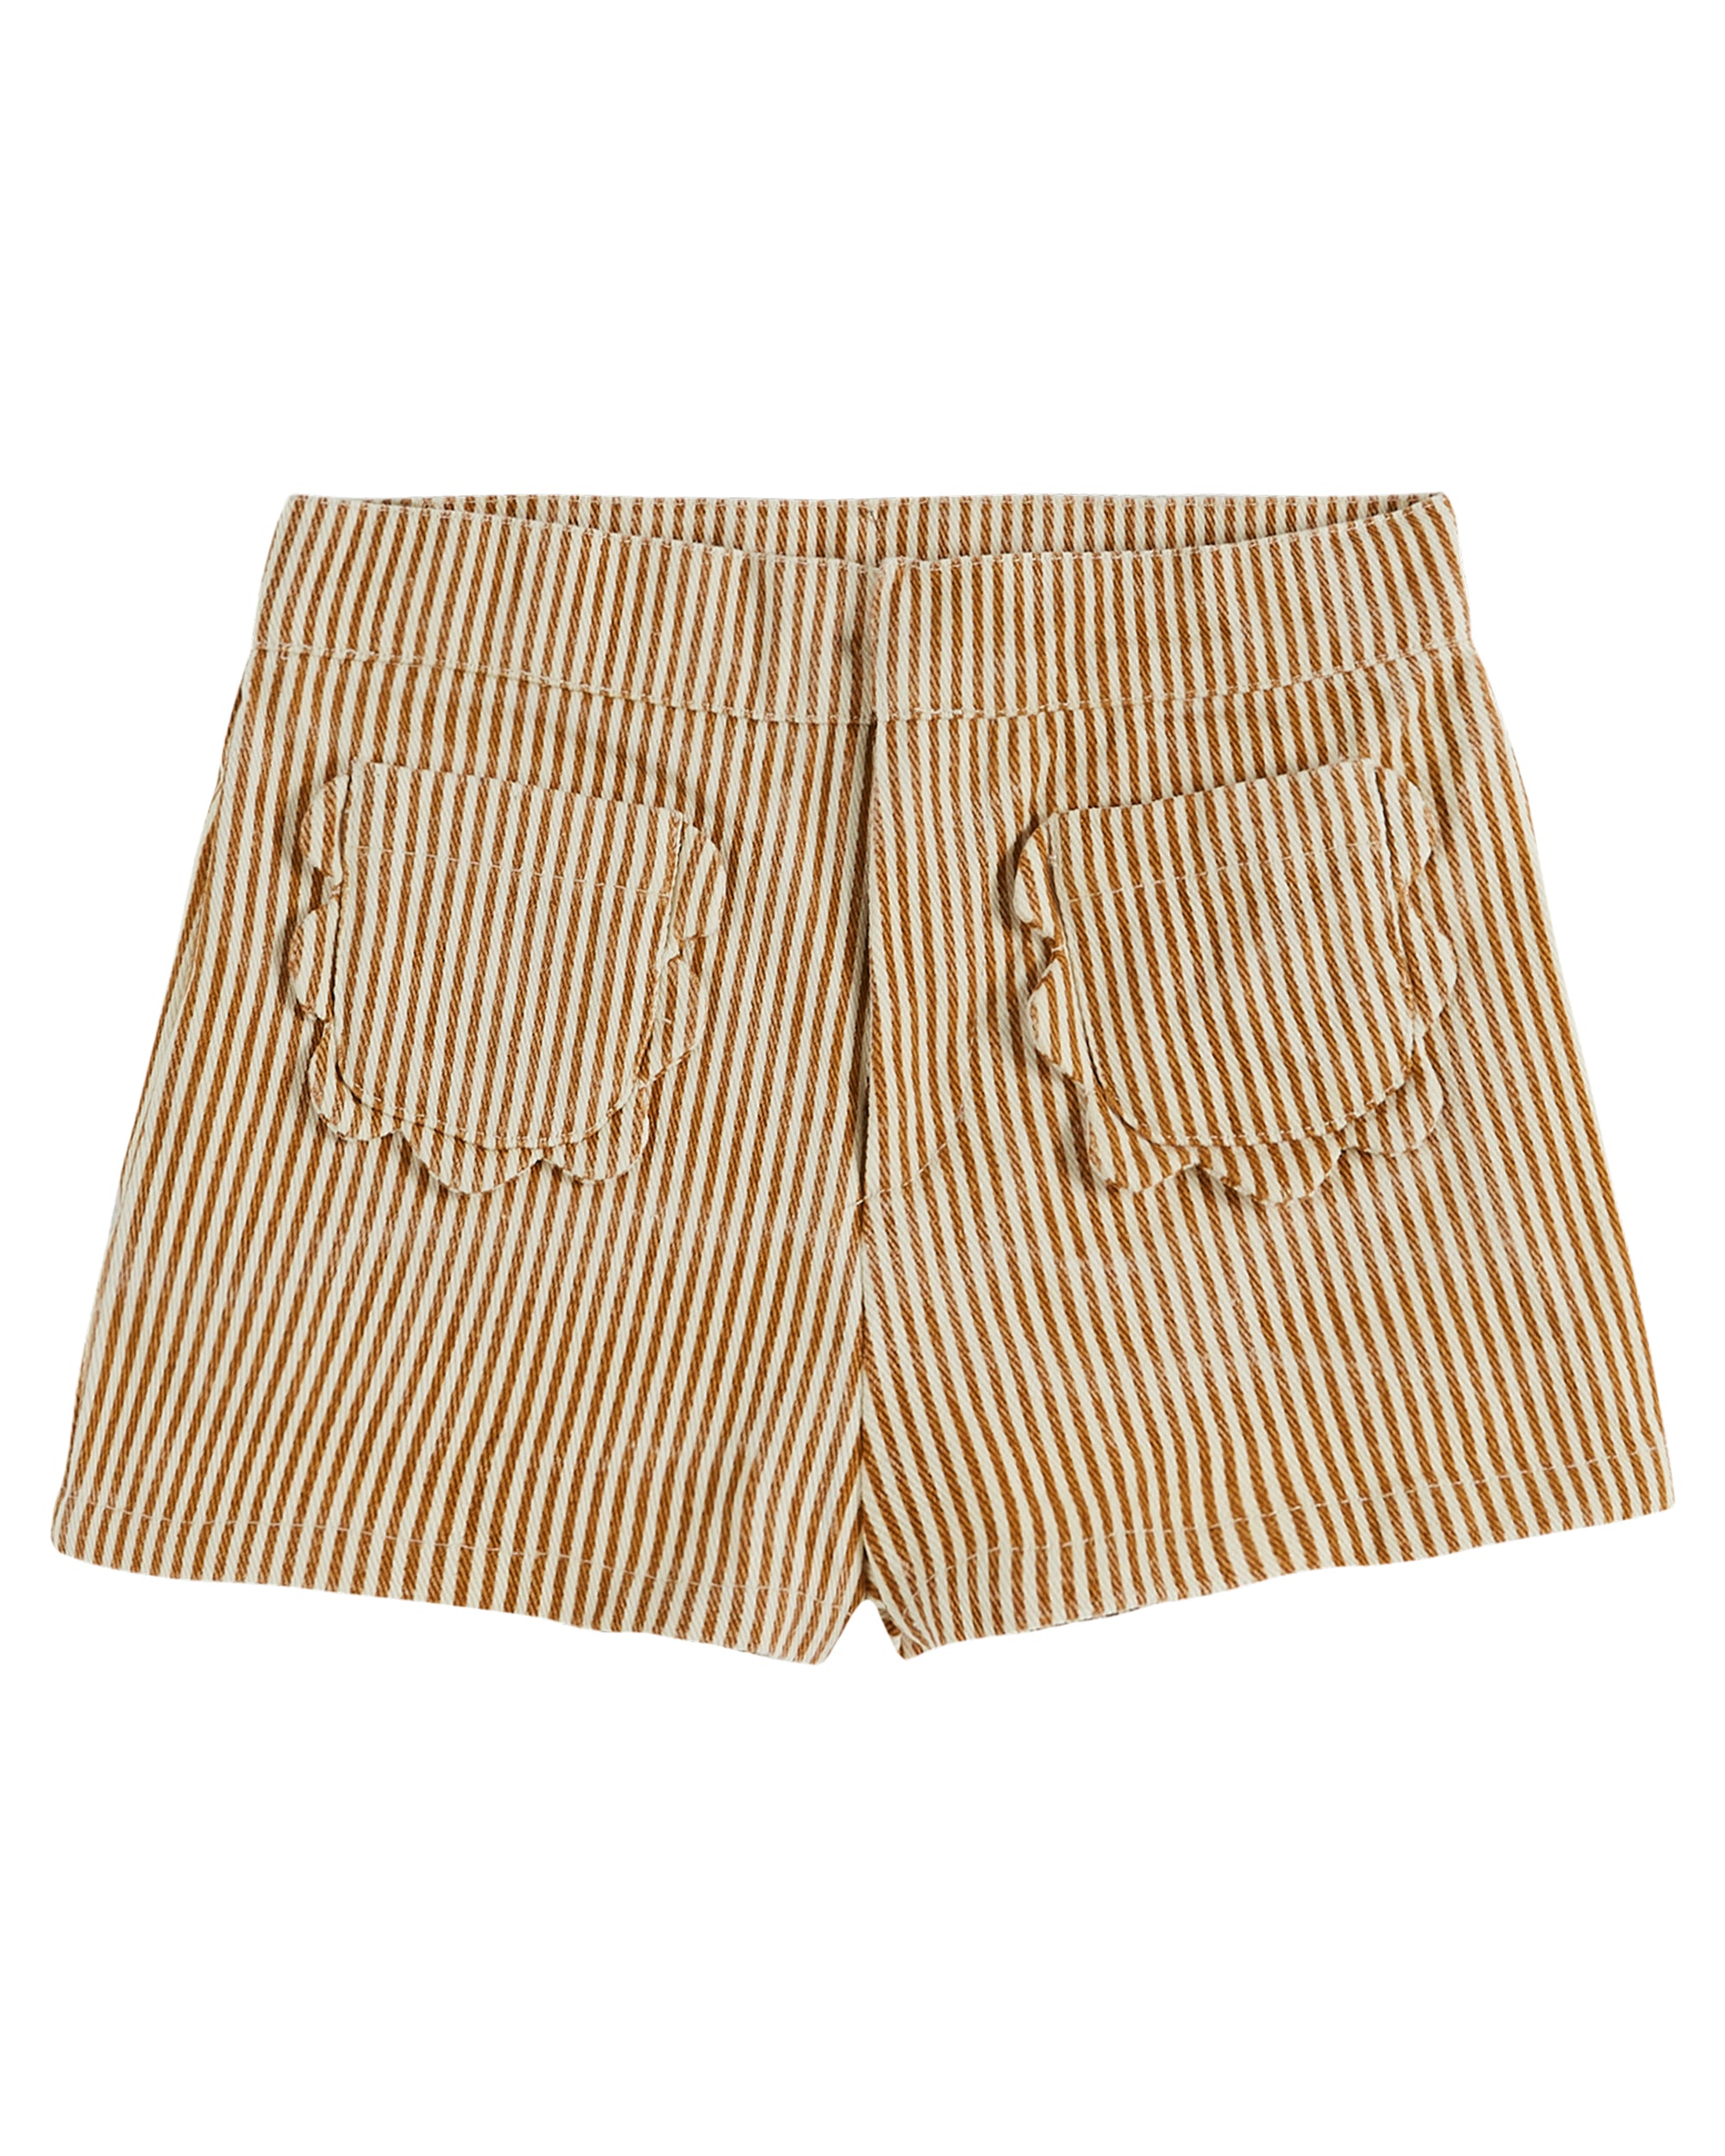 Flower Pocket Shorts I Tan Stripe